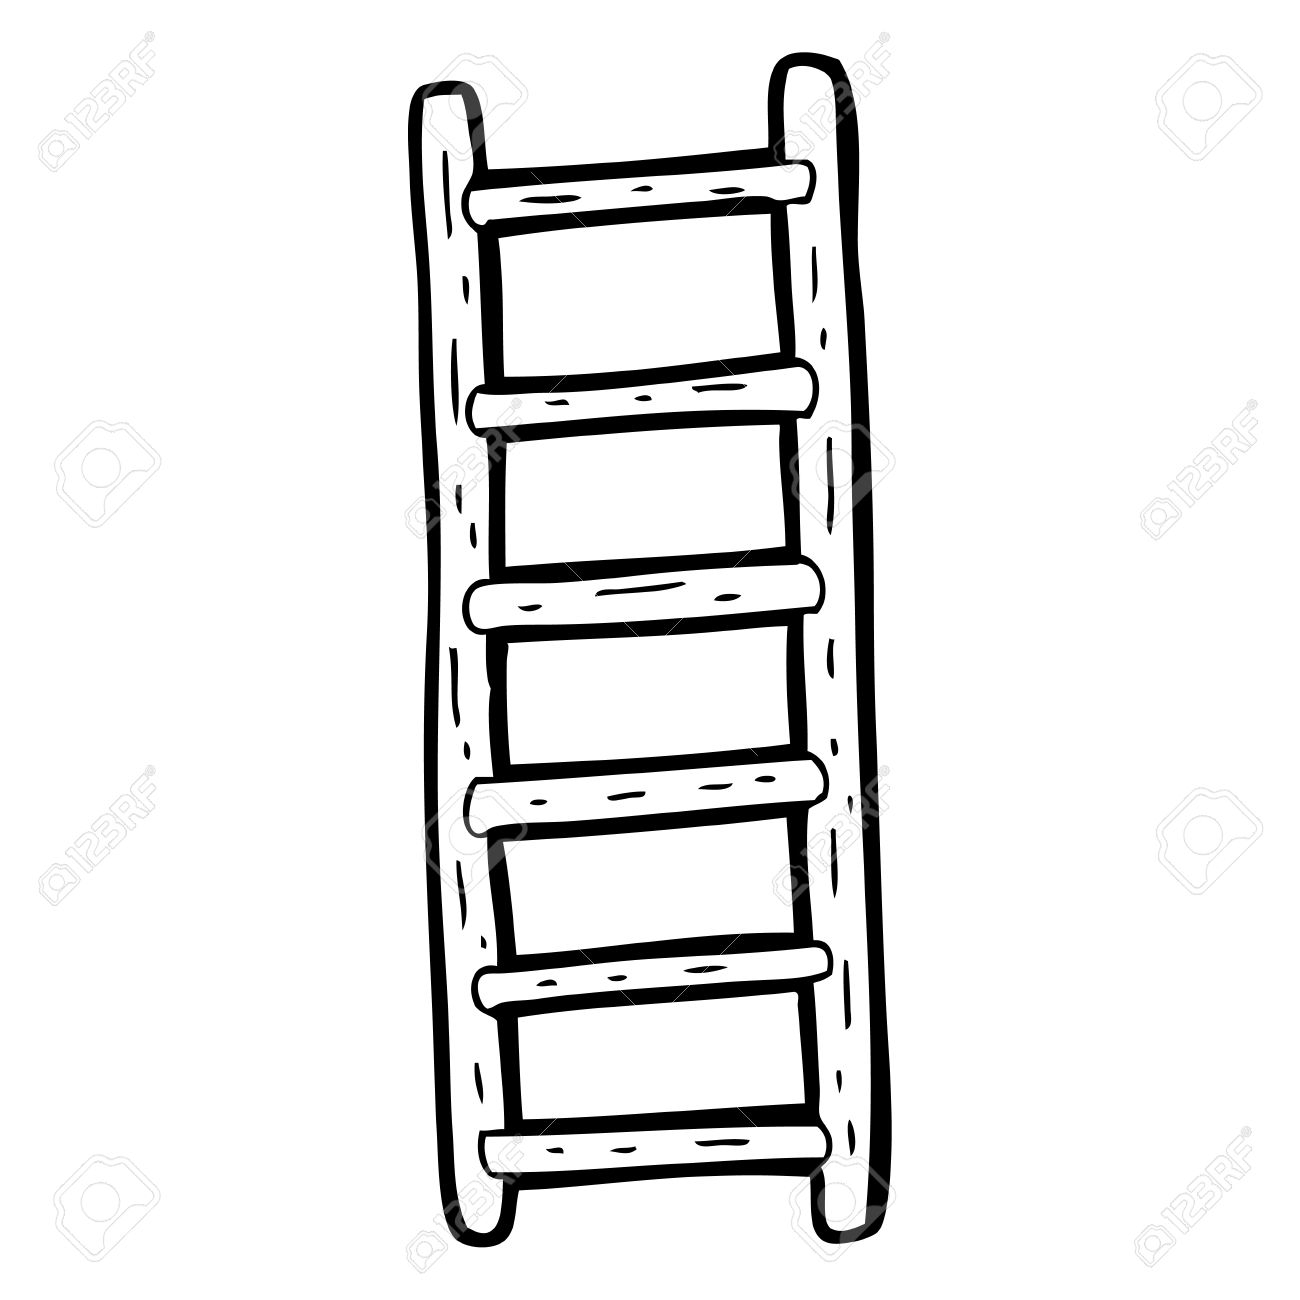 ladder clipart